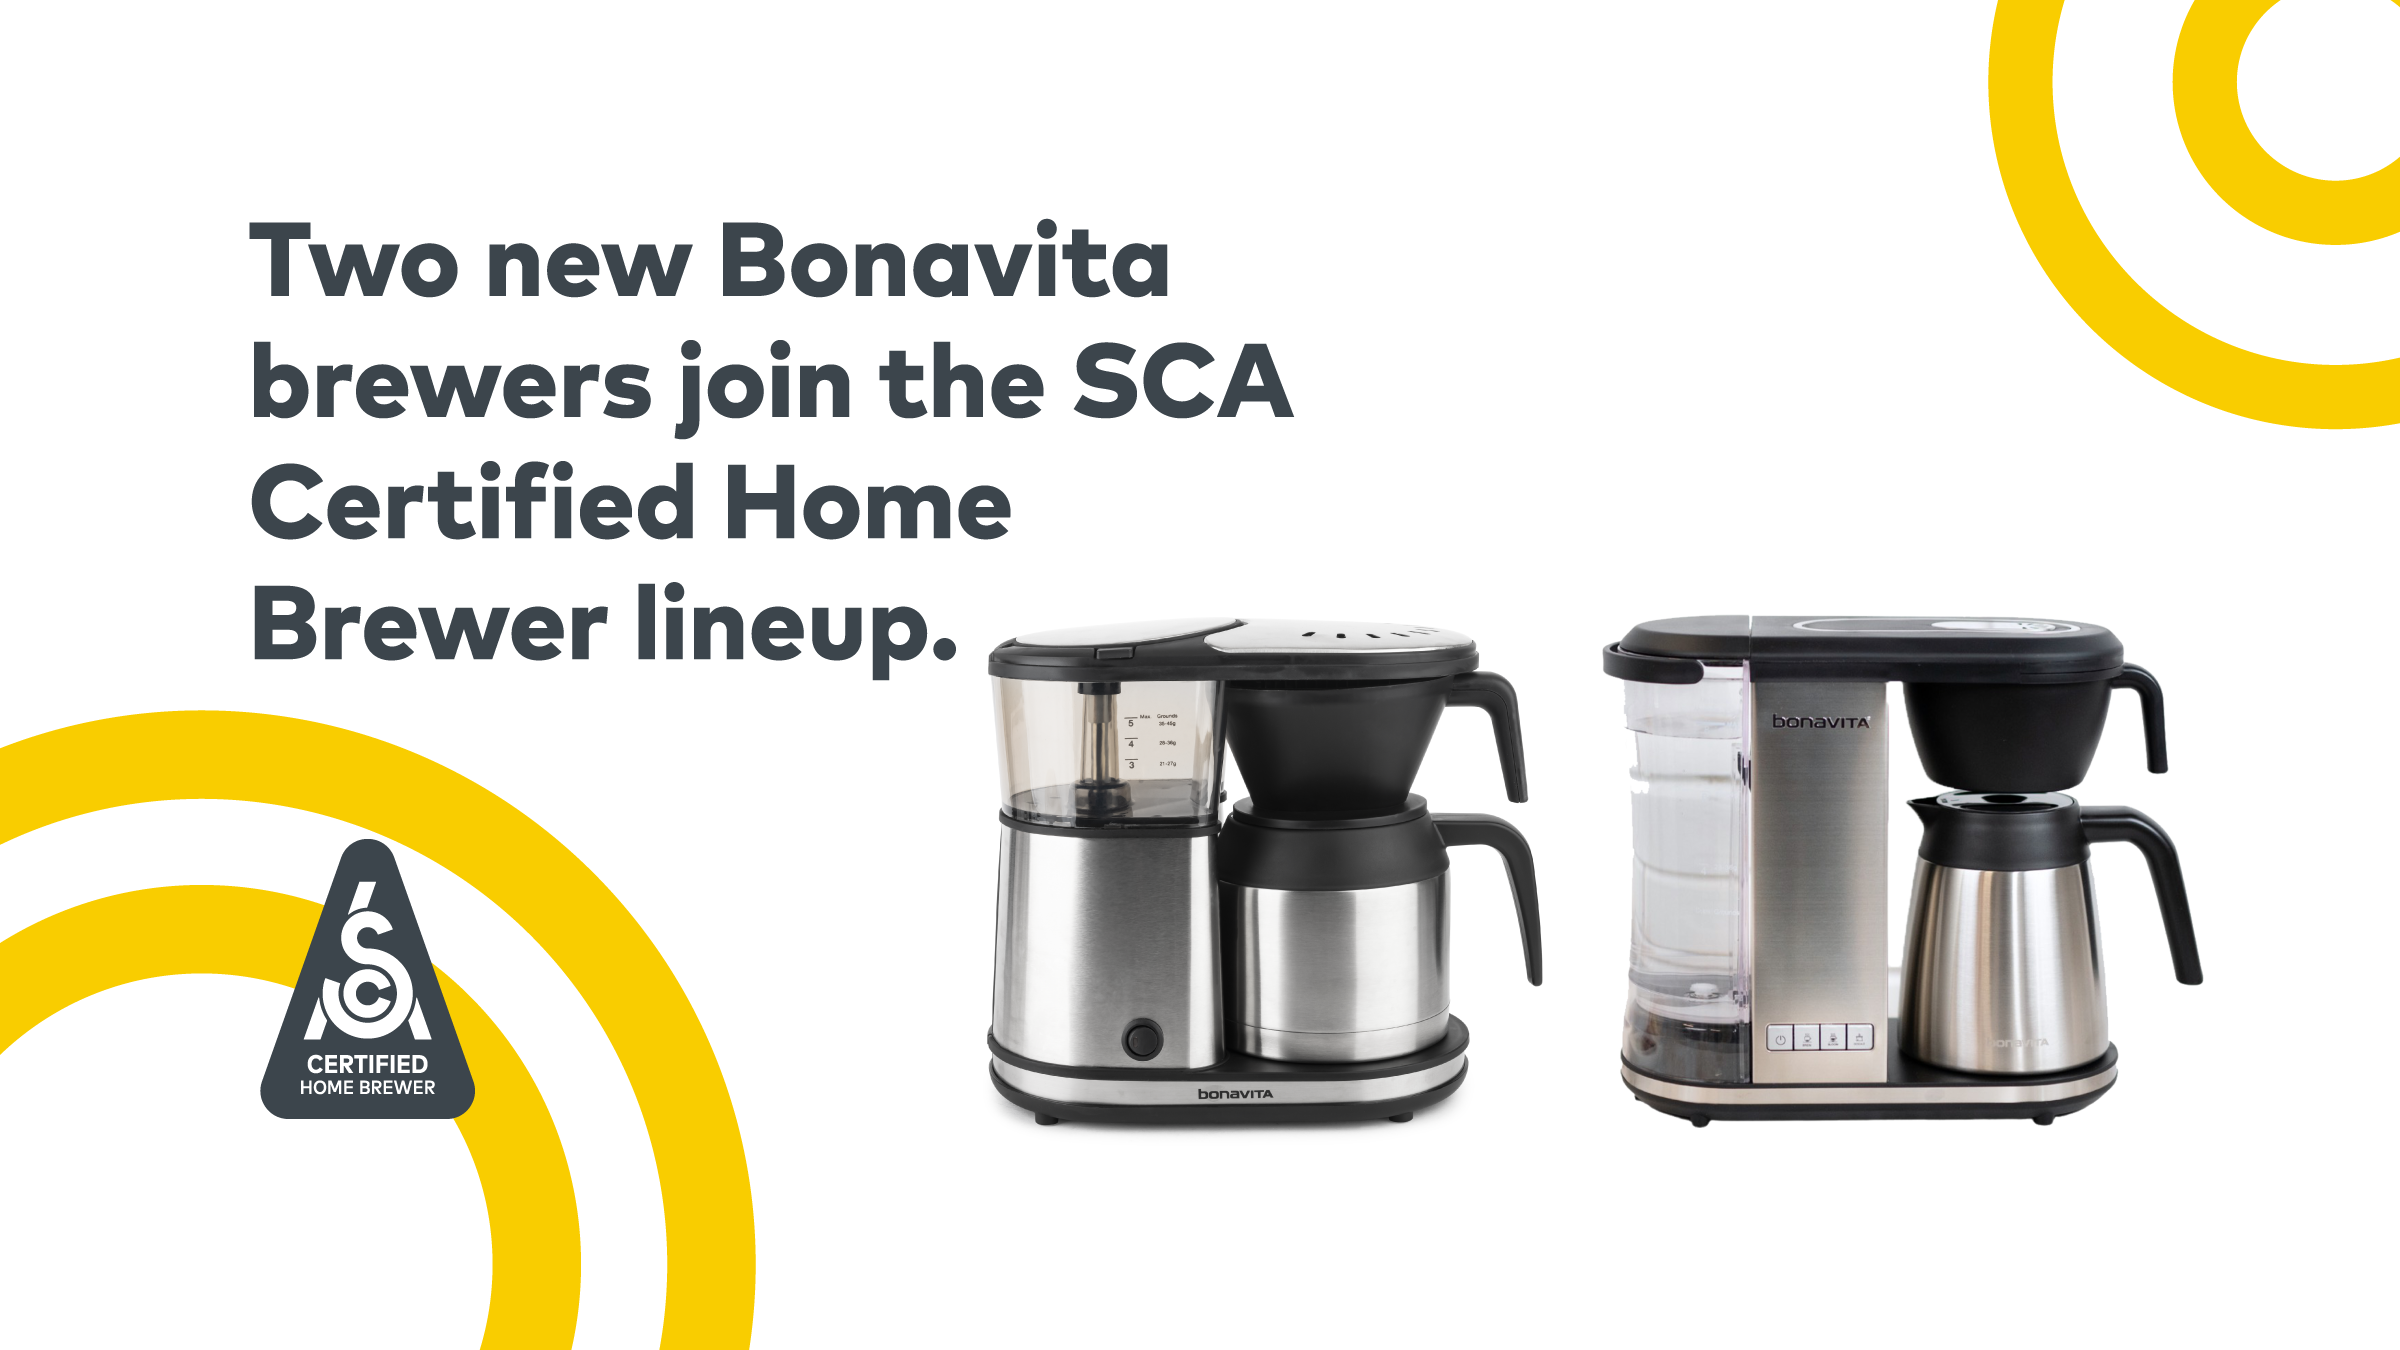 Bonavita 5-Cup Stainless Steel Carafe Coffee Brewer